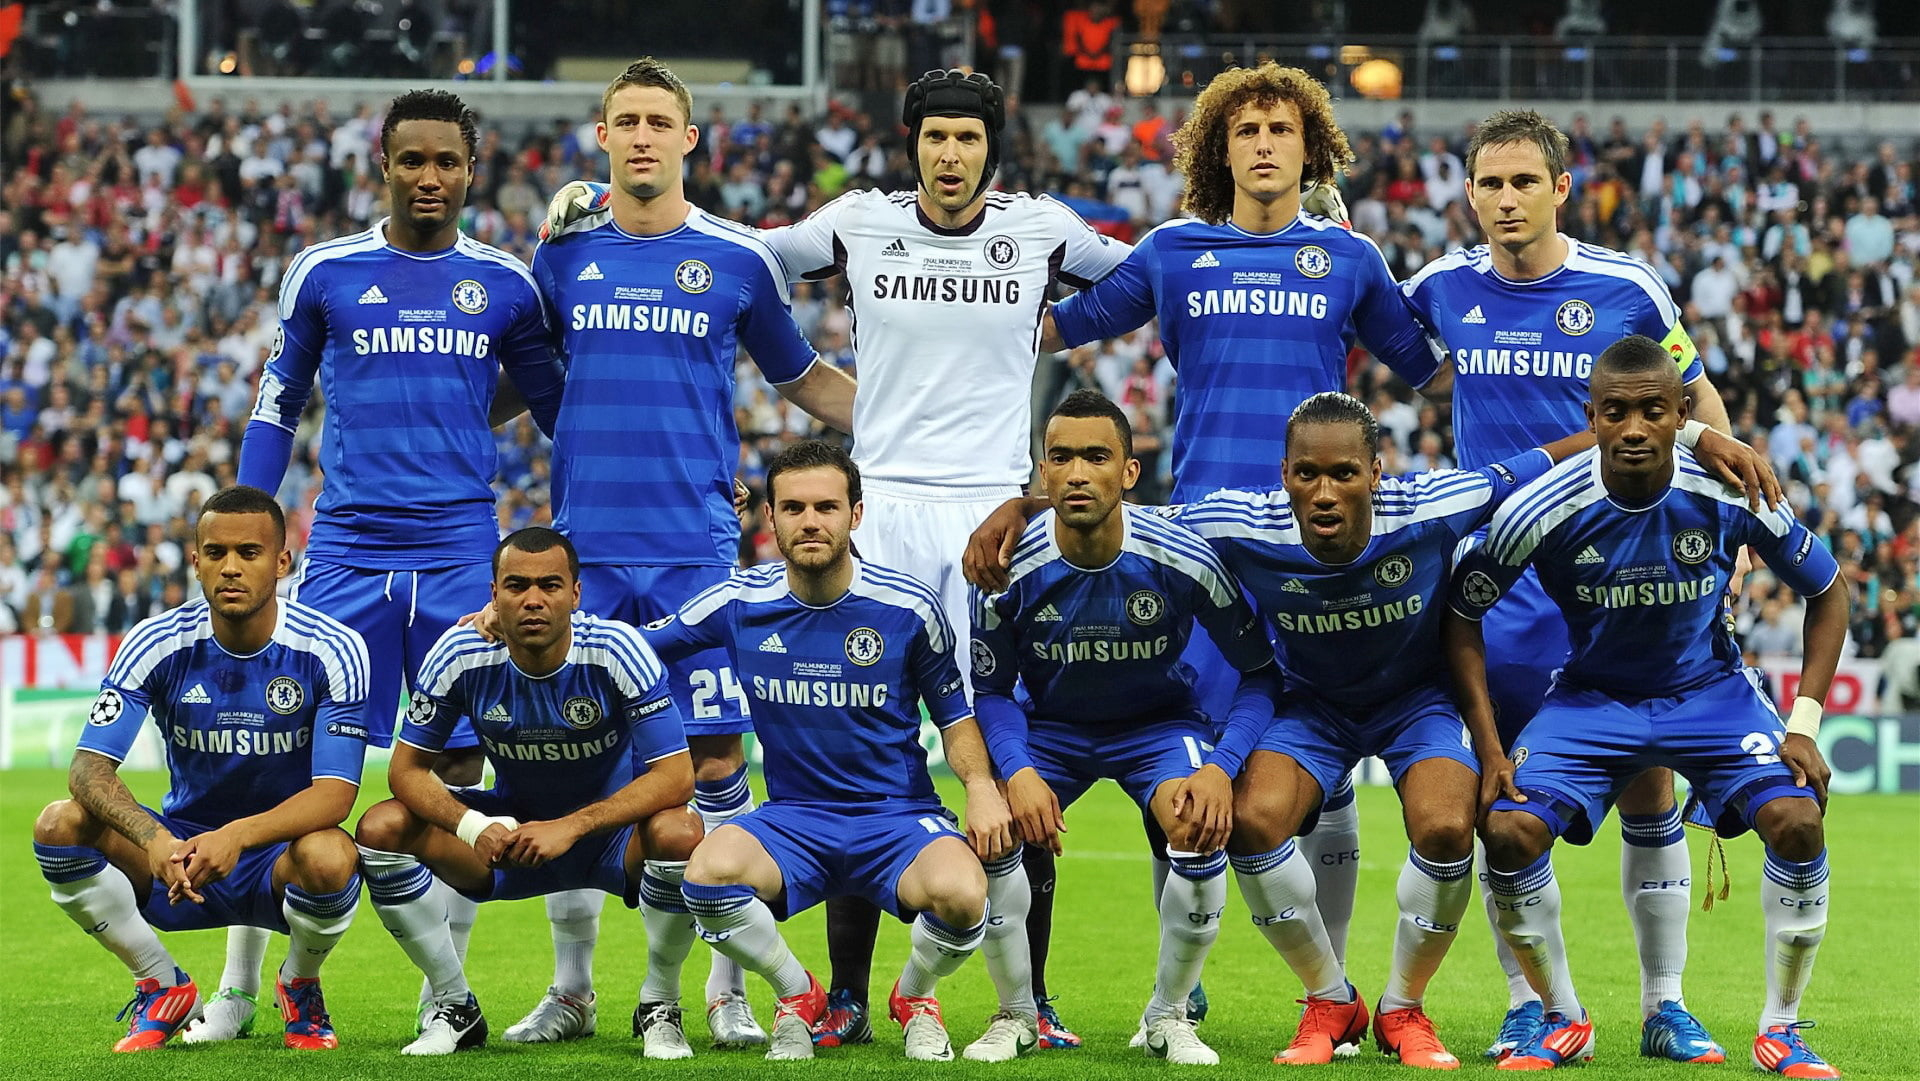 Chelsea FC wallpaper, Champions League Final, men’s blue Samsung jersey